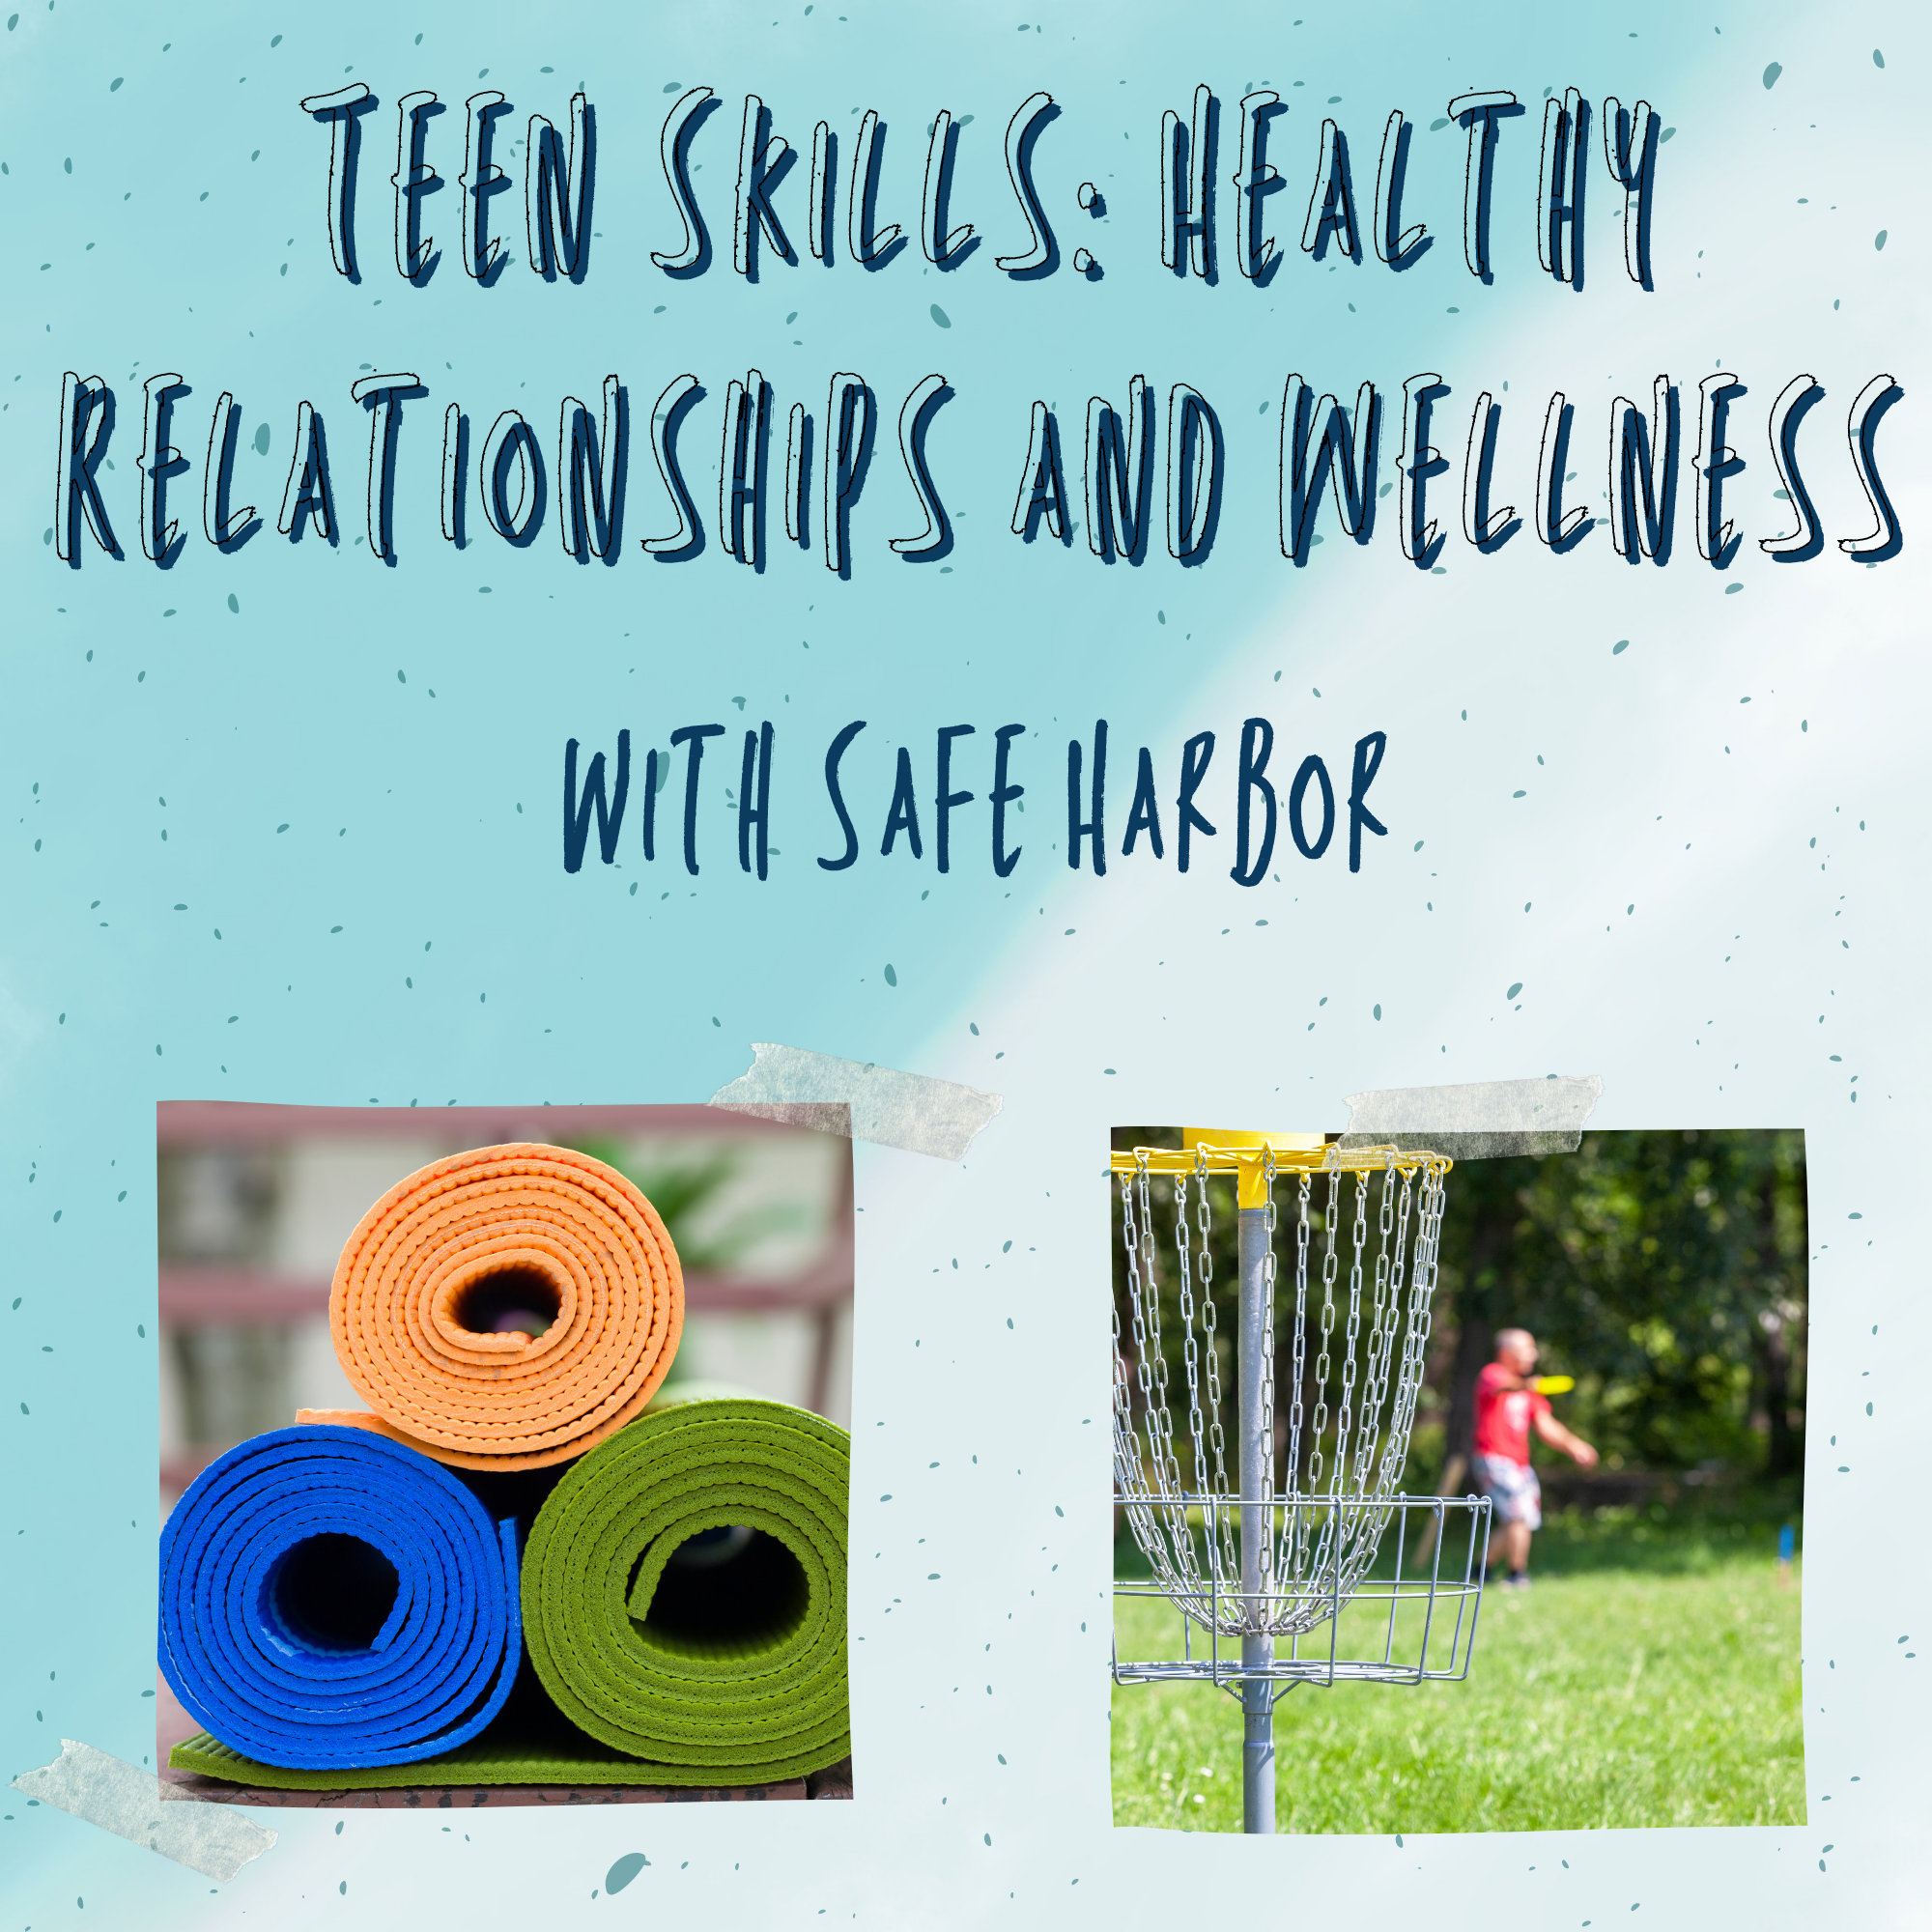 Teen Skills: Healthy Relationships